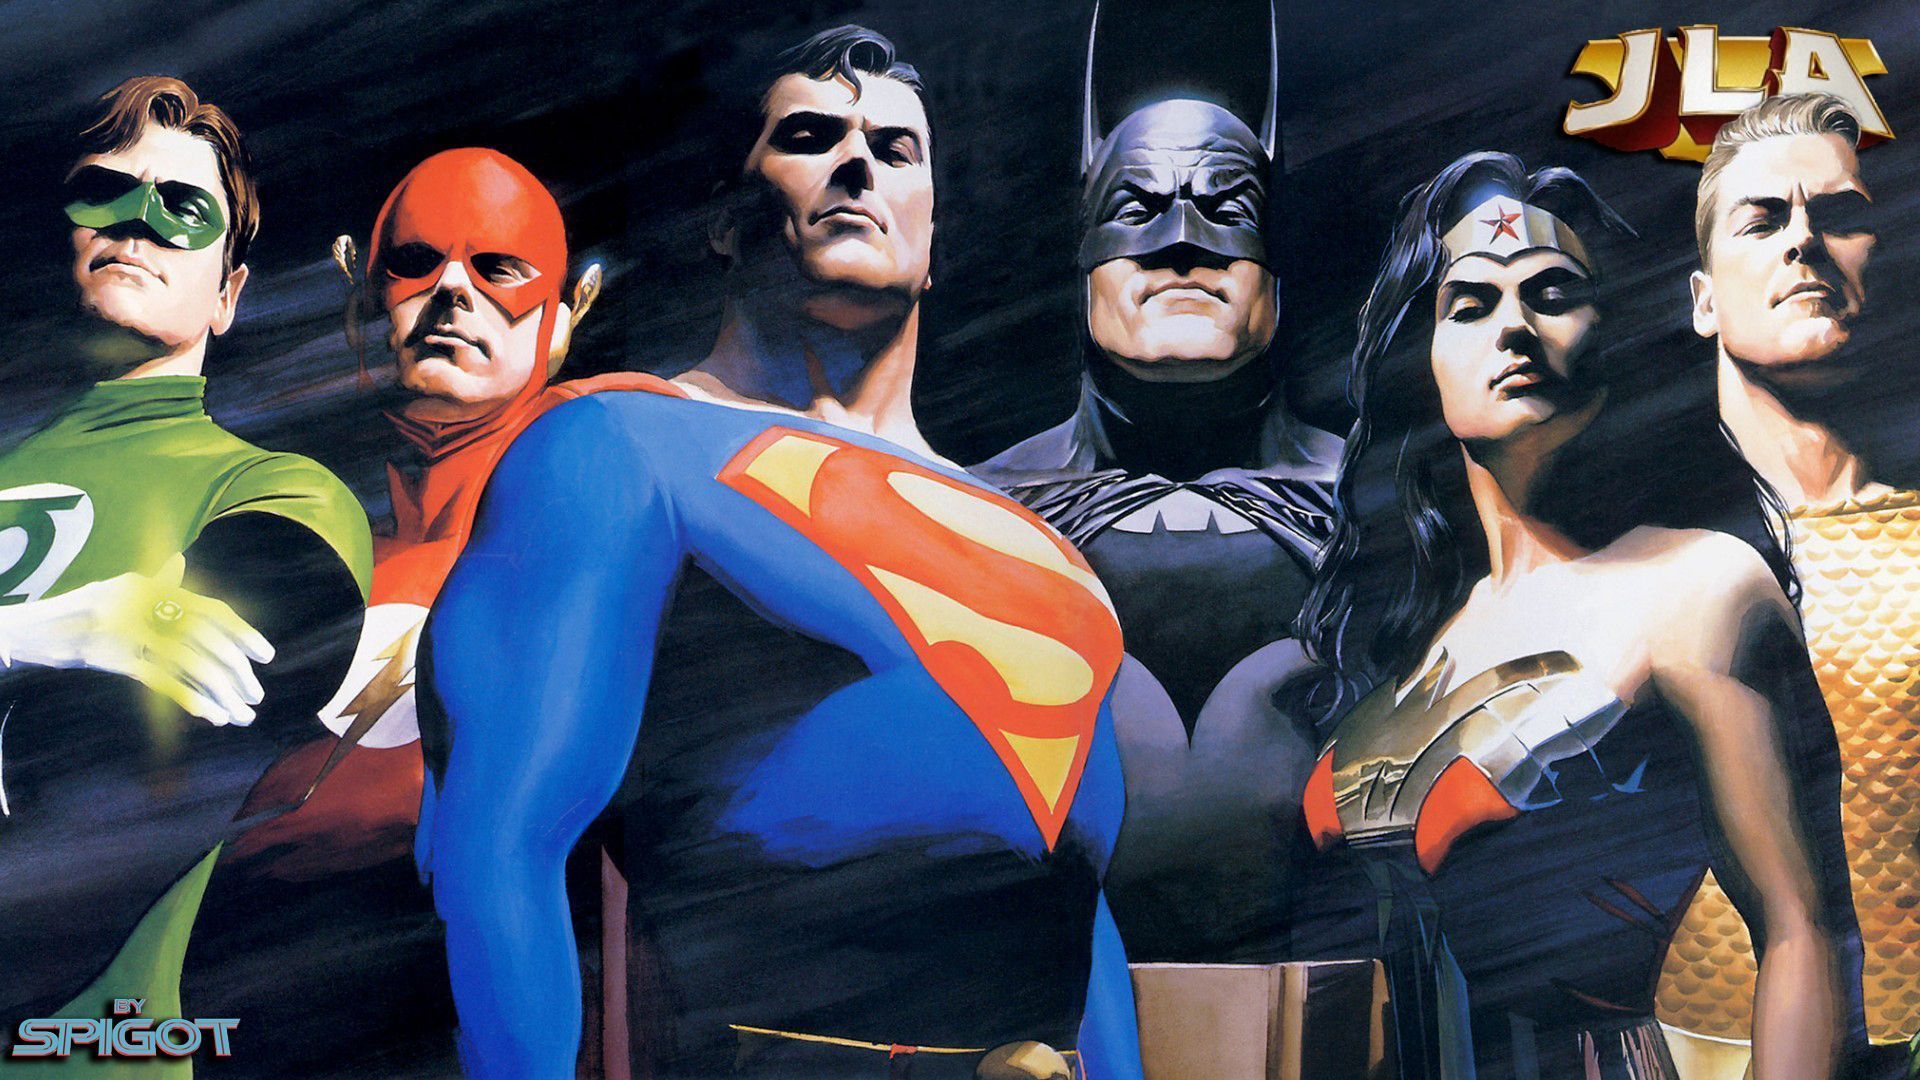 Justice League Wallpaper | George Spigot's Blog